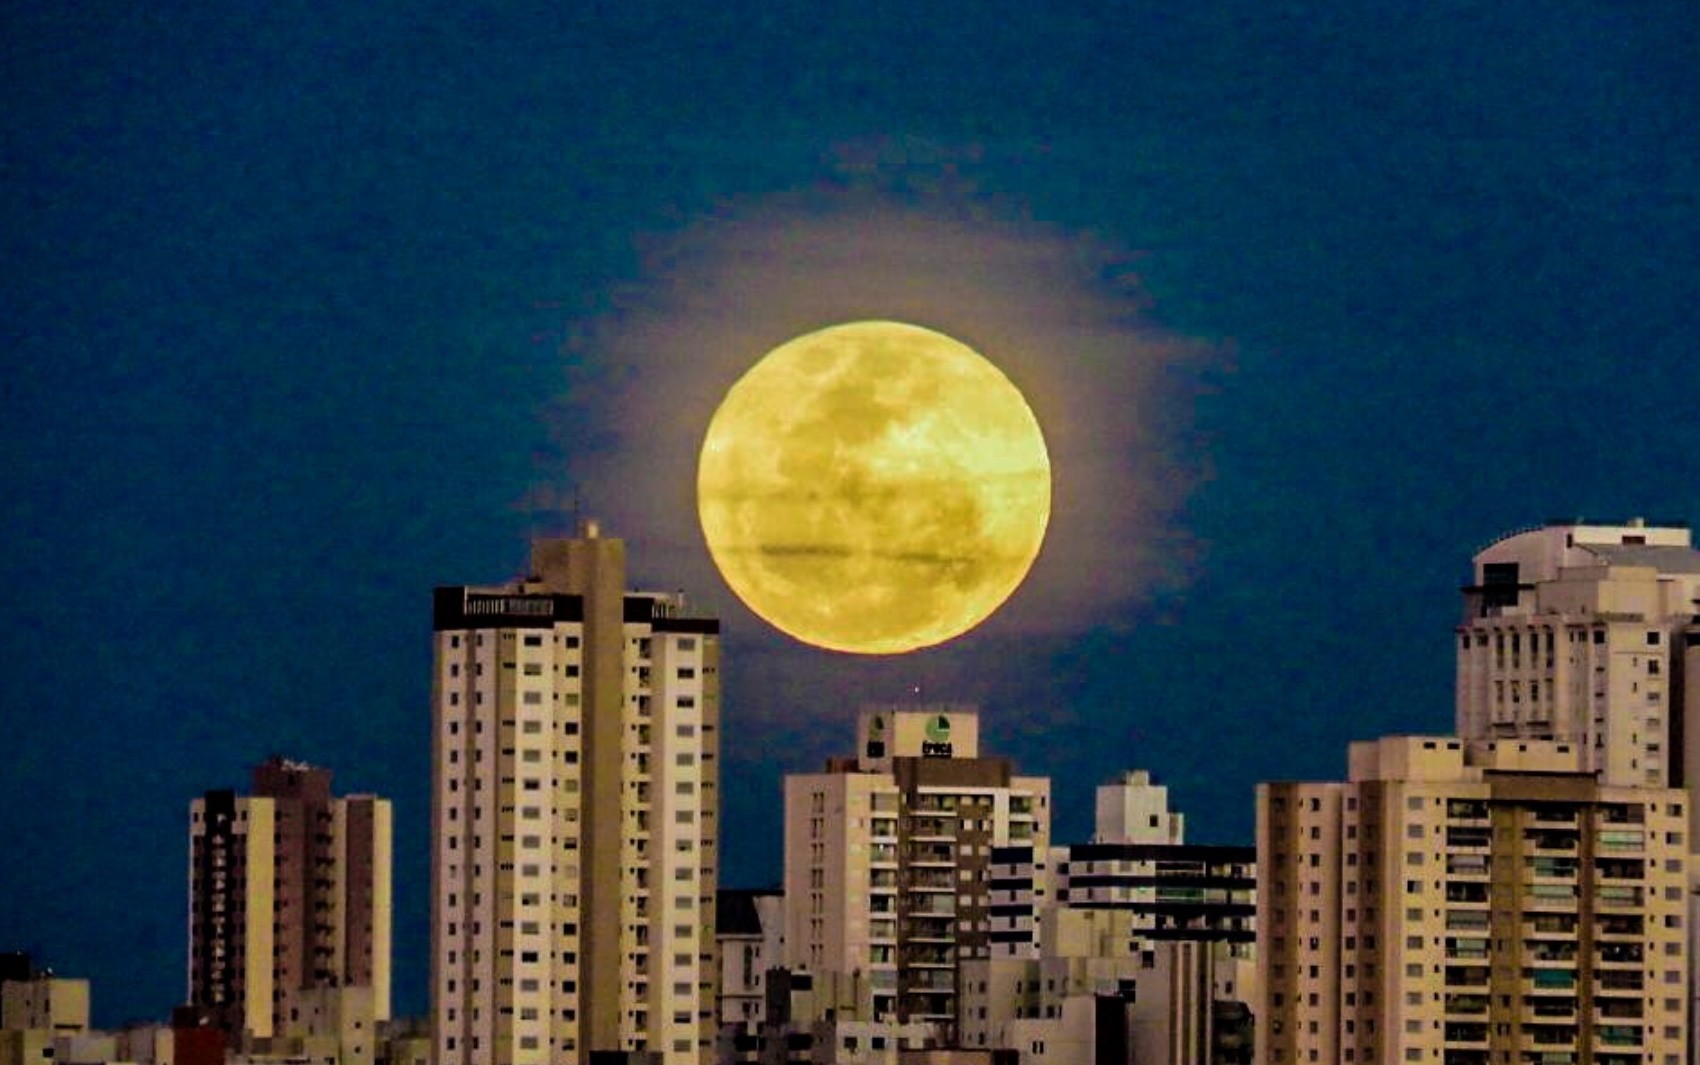 Última superlua do ano poderá ser observada no céu de Goiás nesta quinta-feira